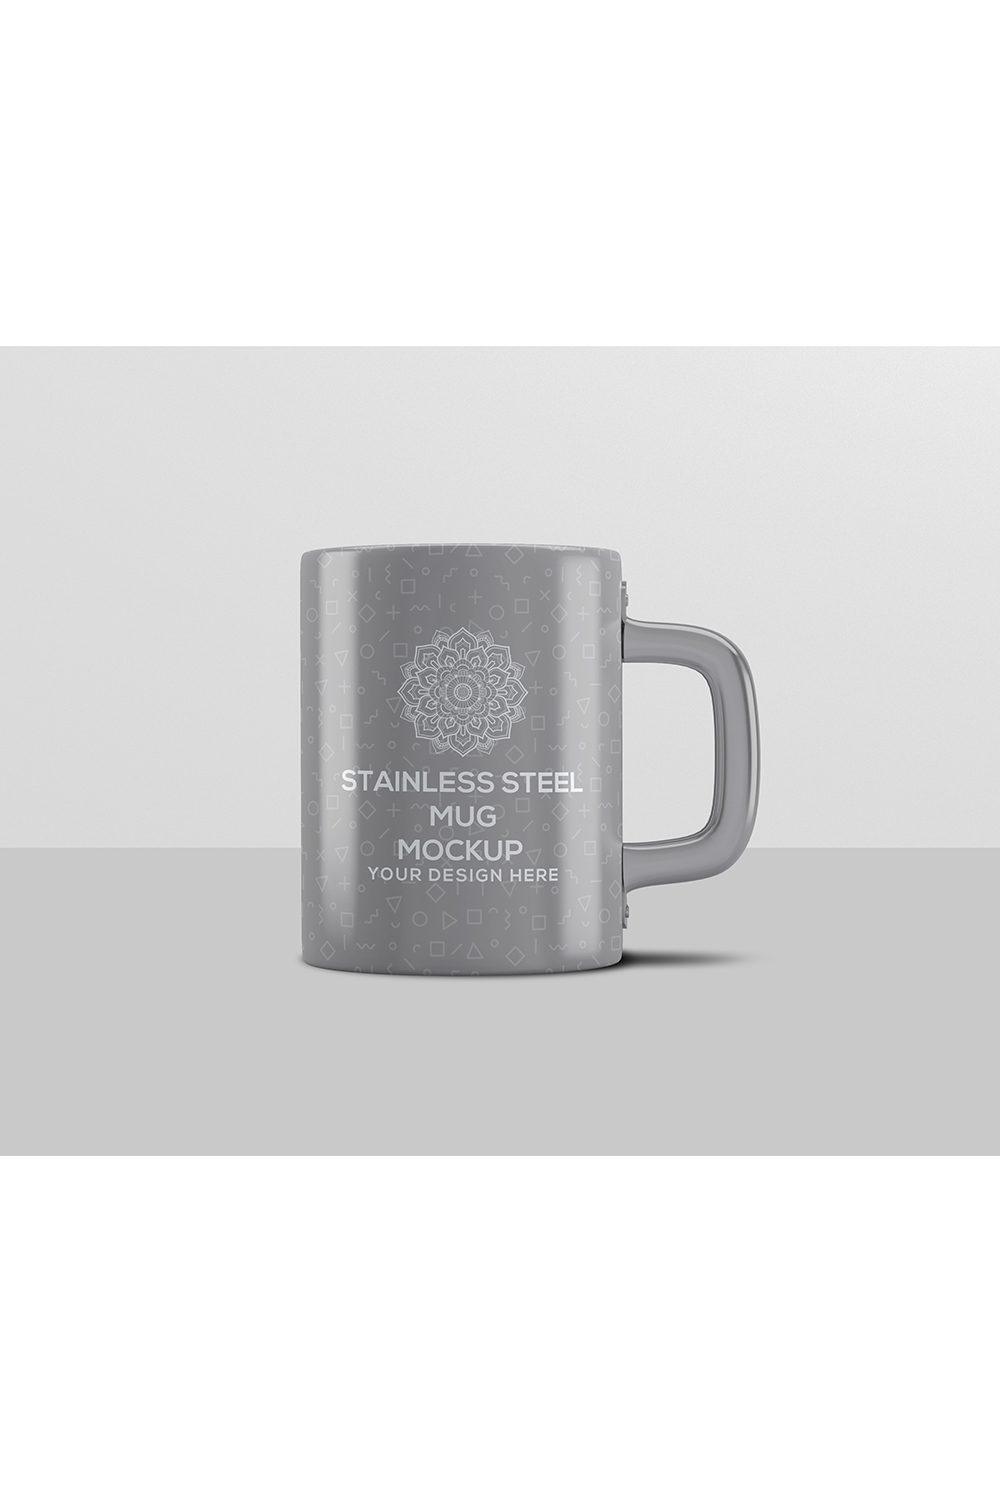 Stainless Steel Mug Mockup pinterest preview image.